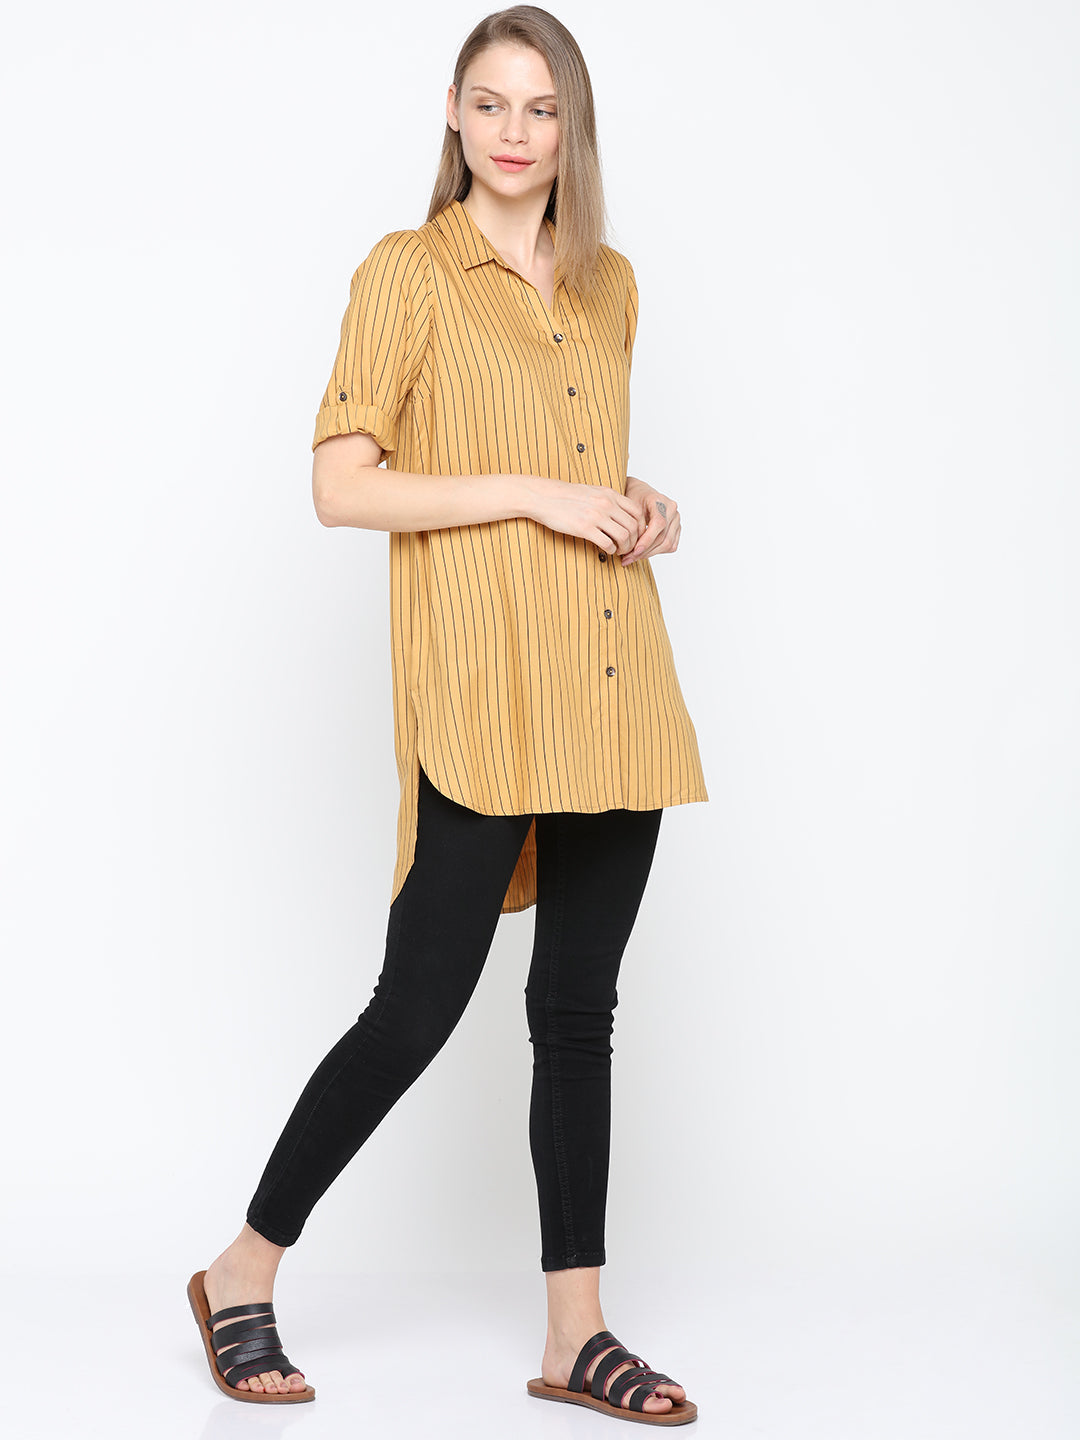 Striped mustard shirt